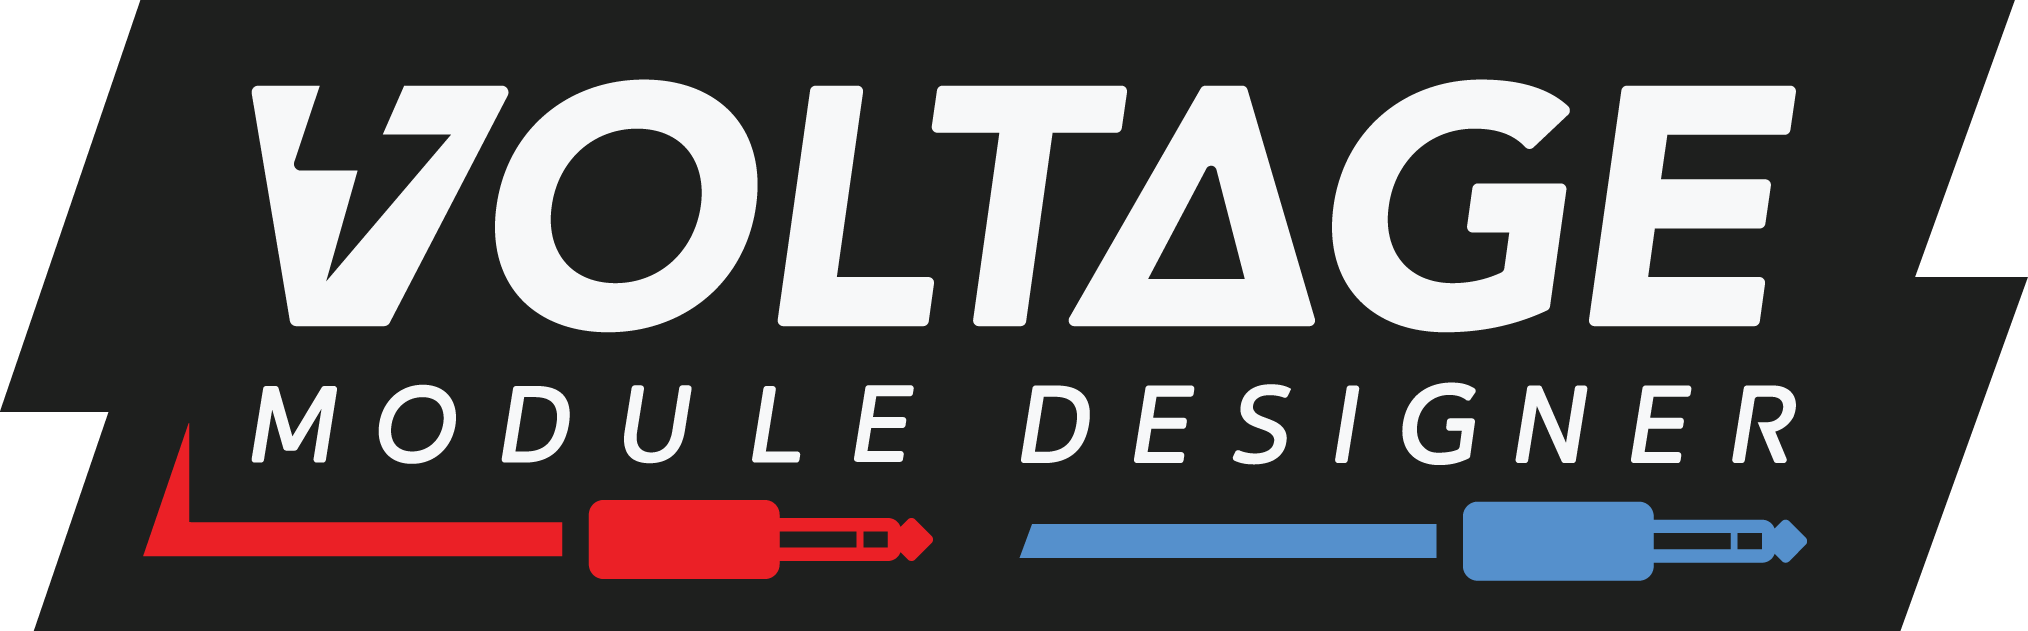 Voltage Module Designer Logo